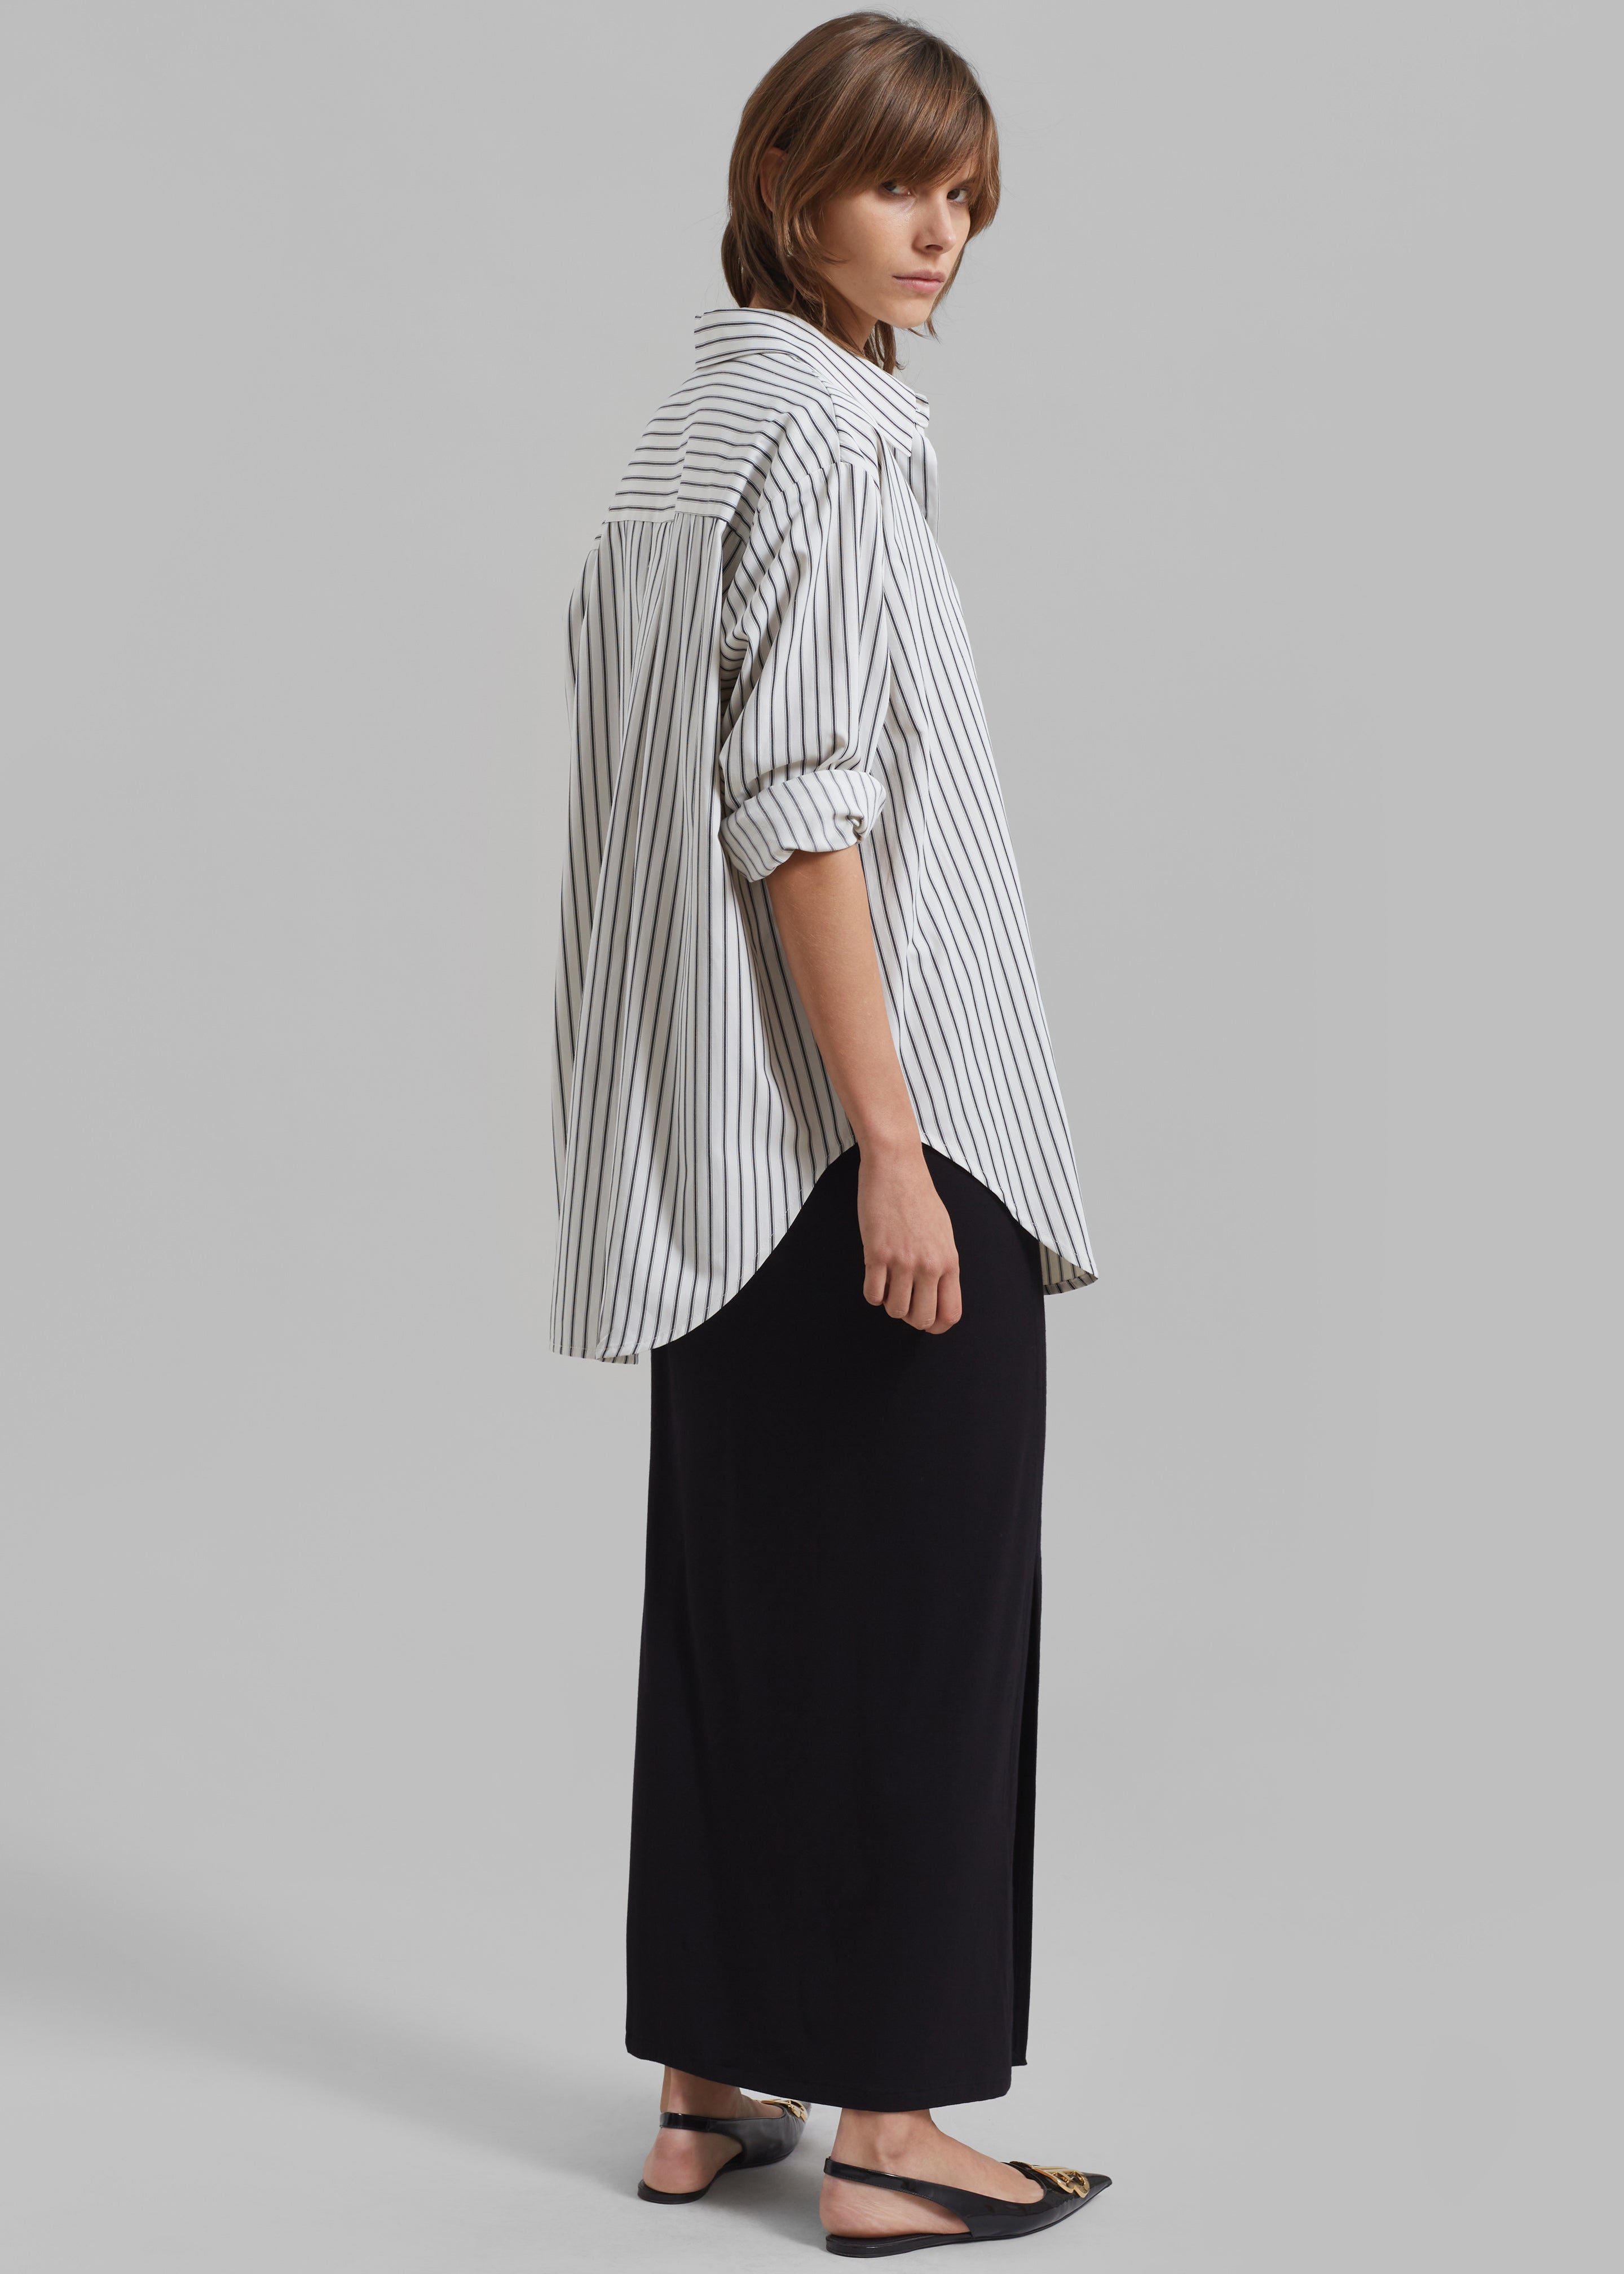 Rine Pocket Shirt - White/Black Stripe - 7